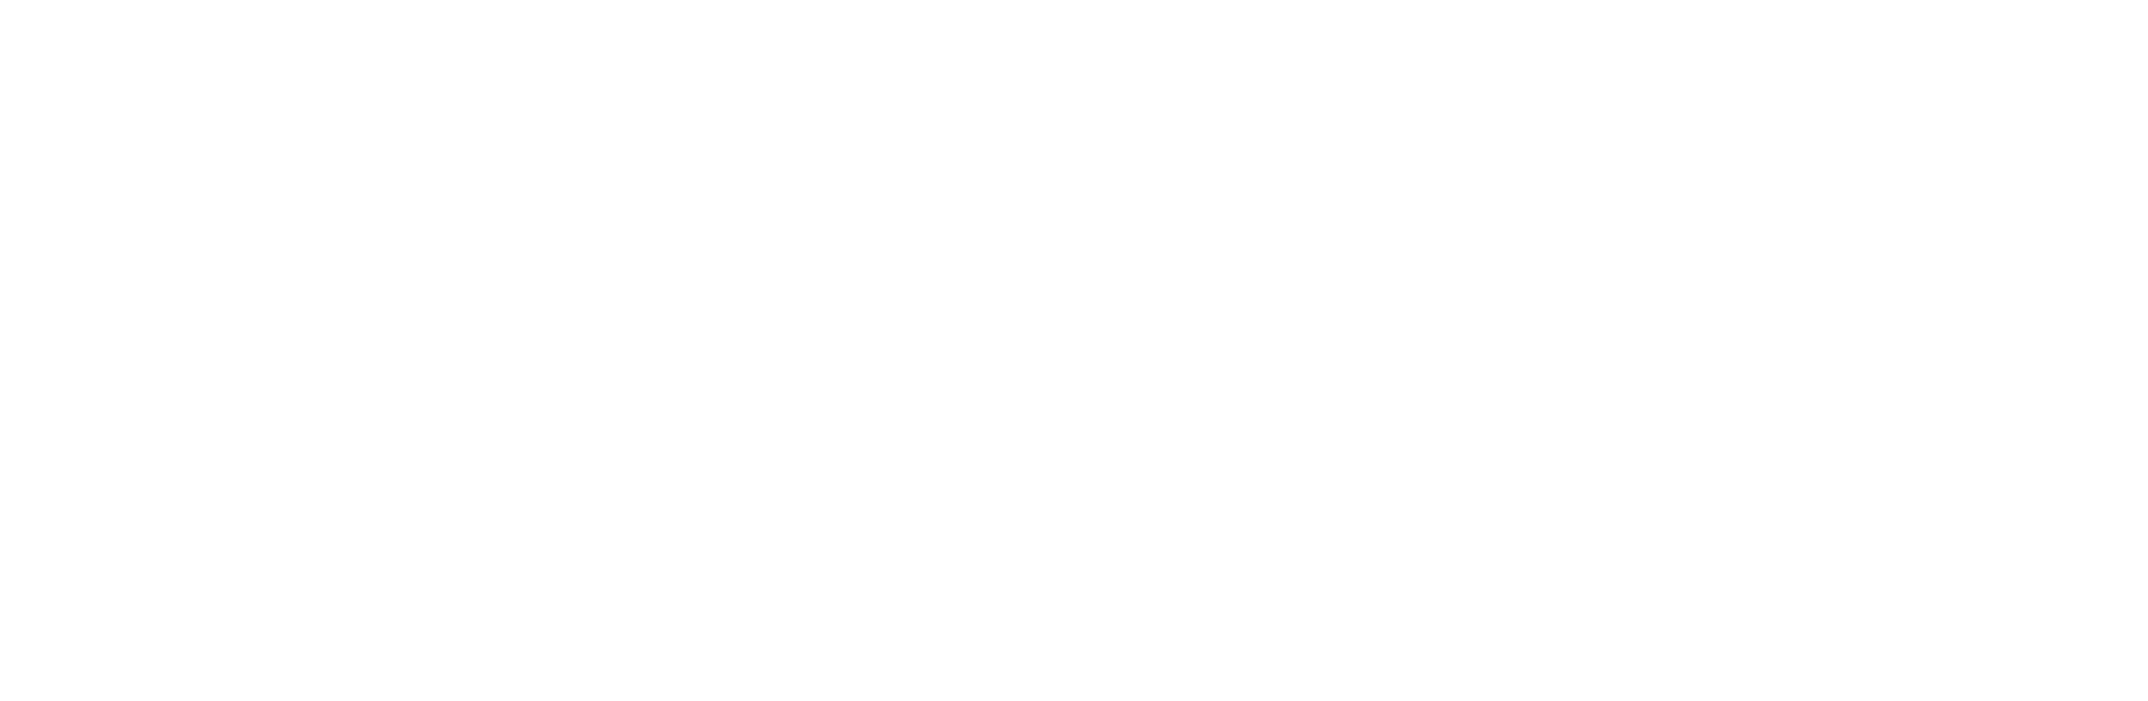 Bitcoinist